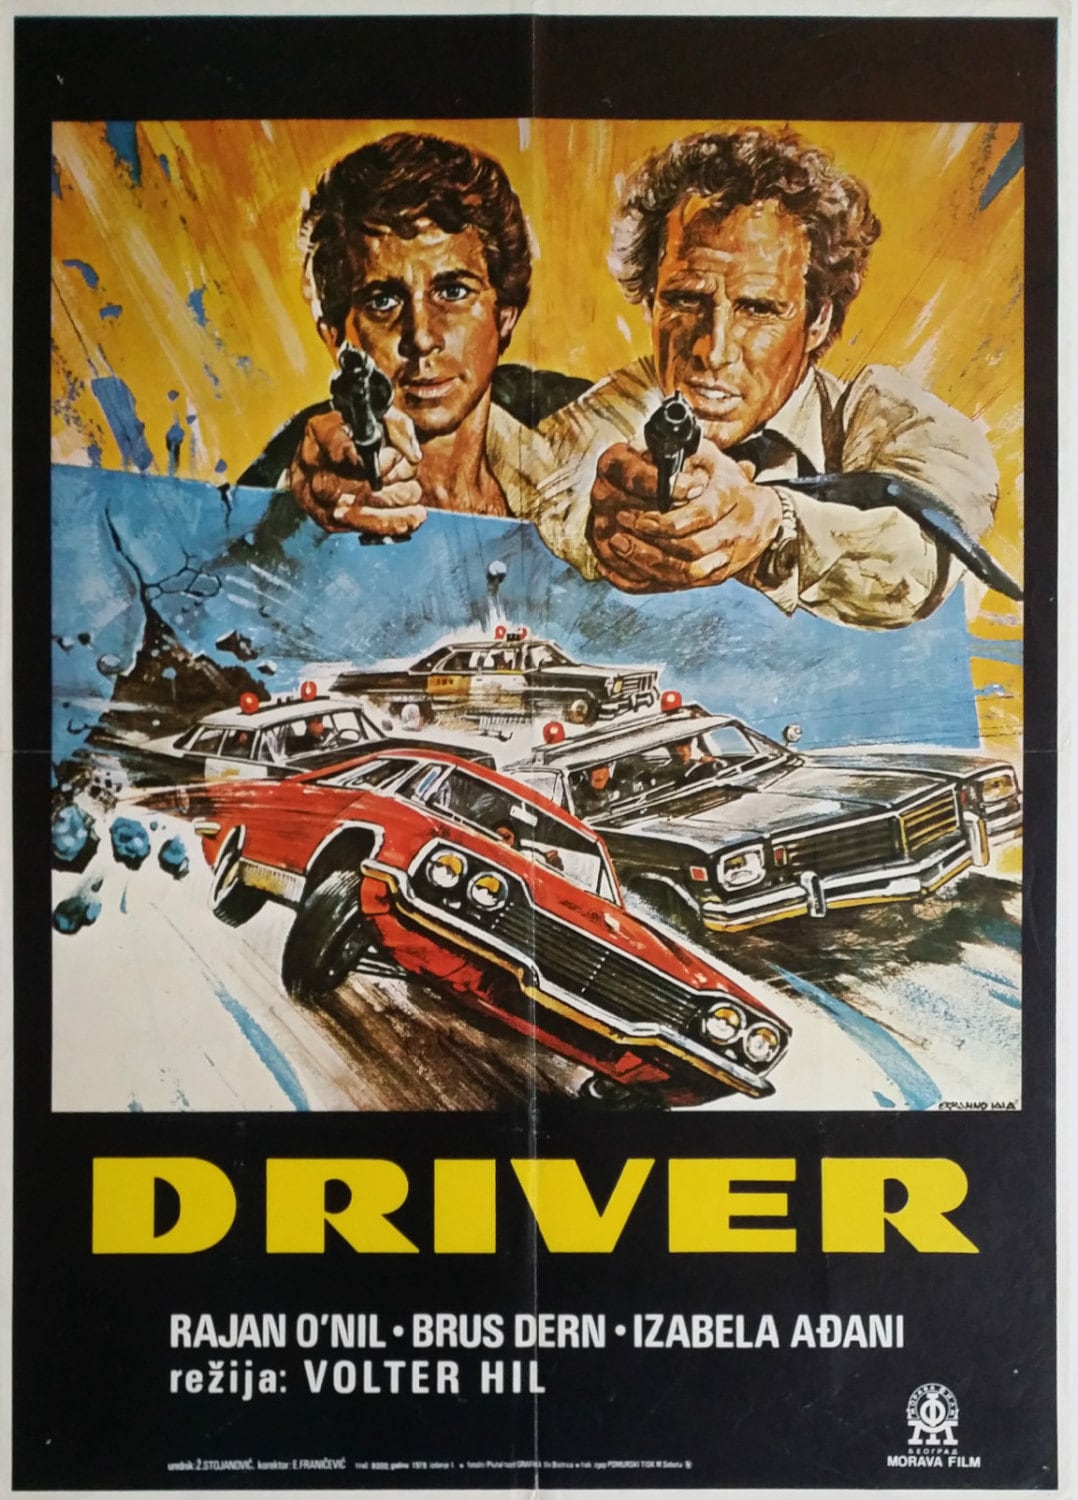 1979 "The Driver" Movie Poster - Original Vintage Poster